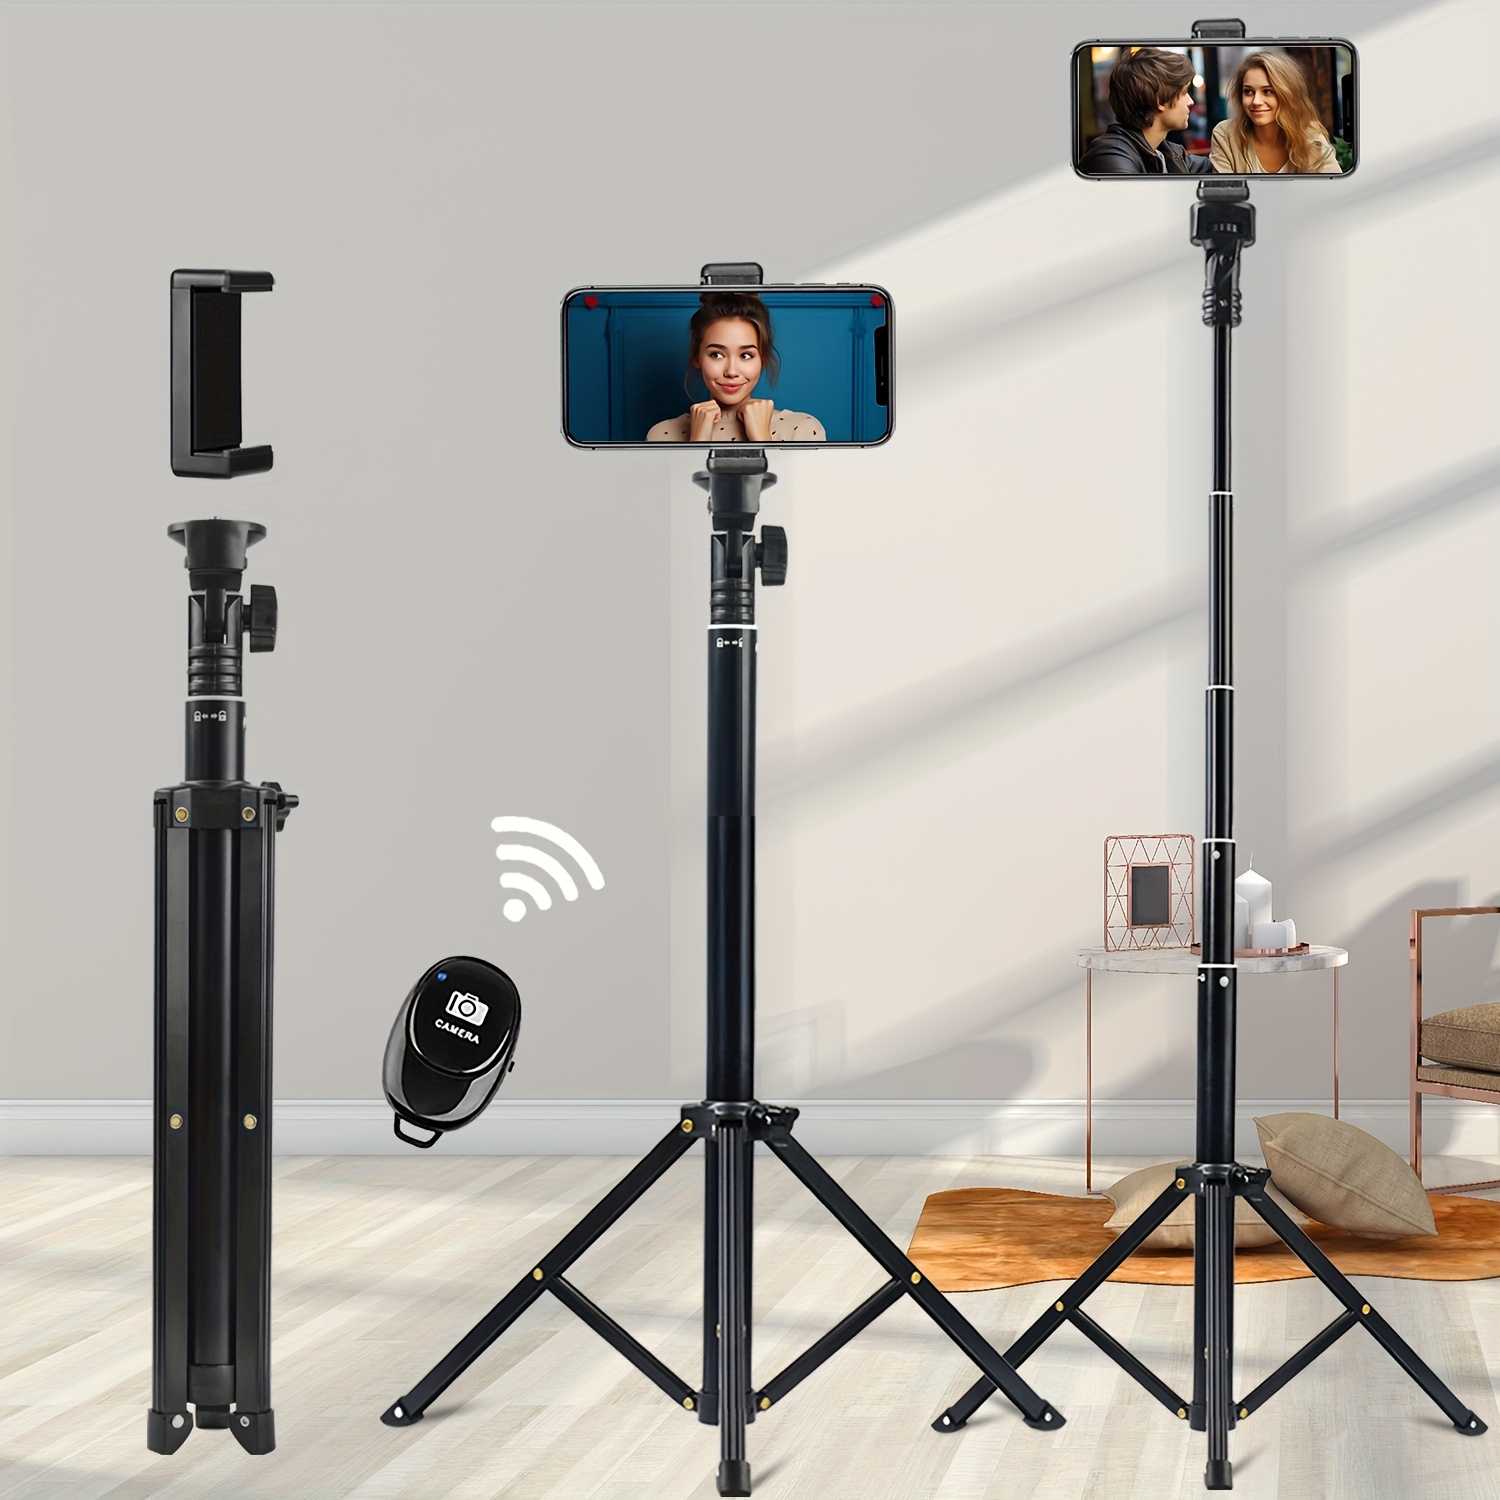 Mini Trípode Universal Cam y Smartphone > Fotografia Utiles > Electro Hogar